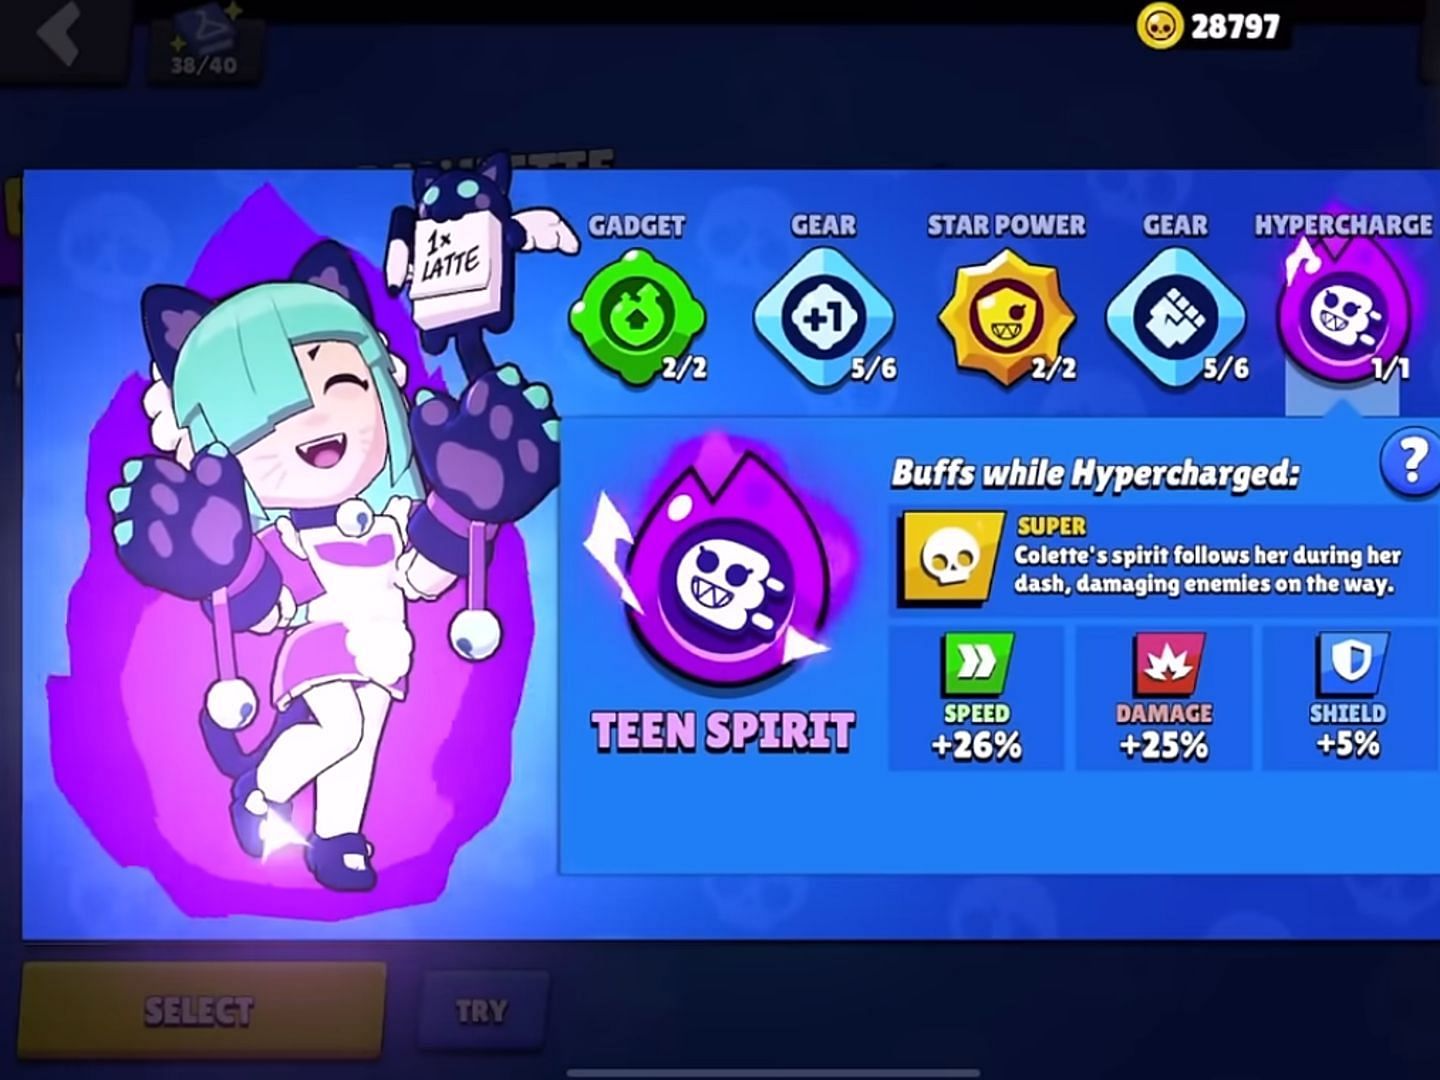 Teen Spirit Hypercharge (Image via Supercell)